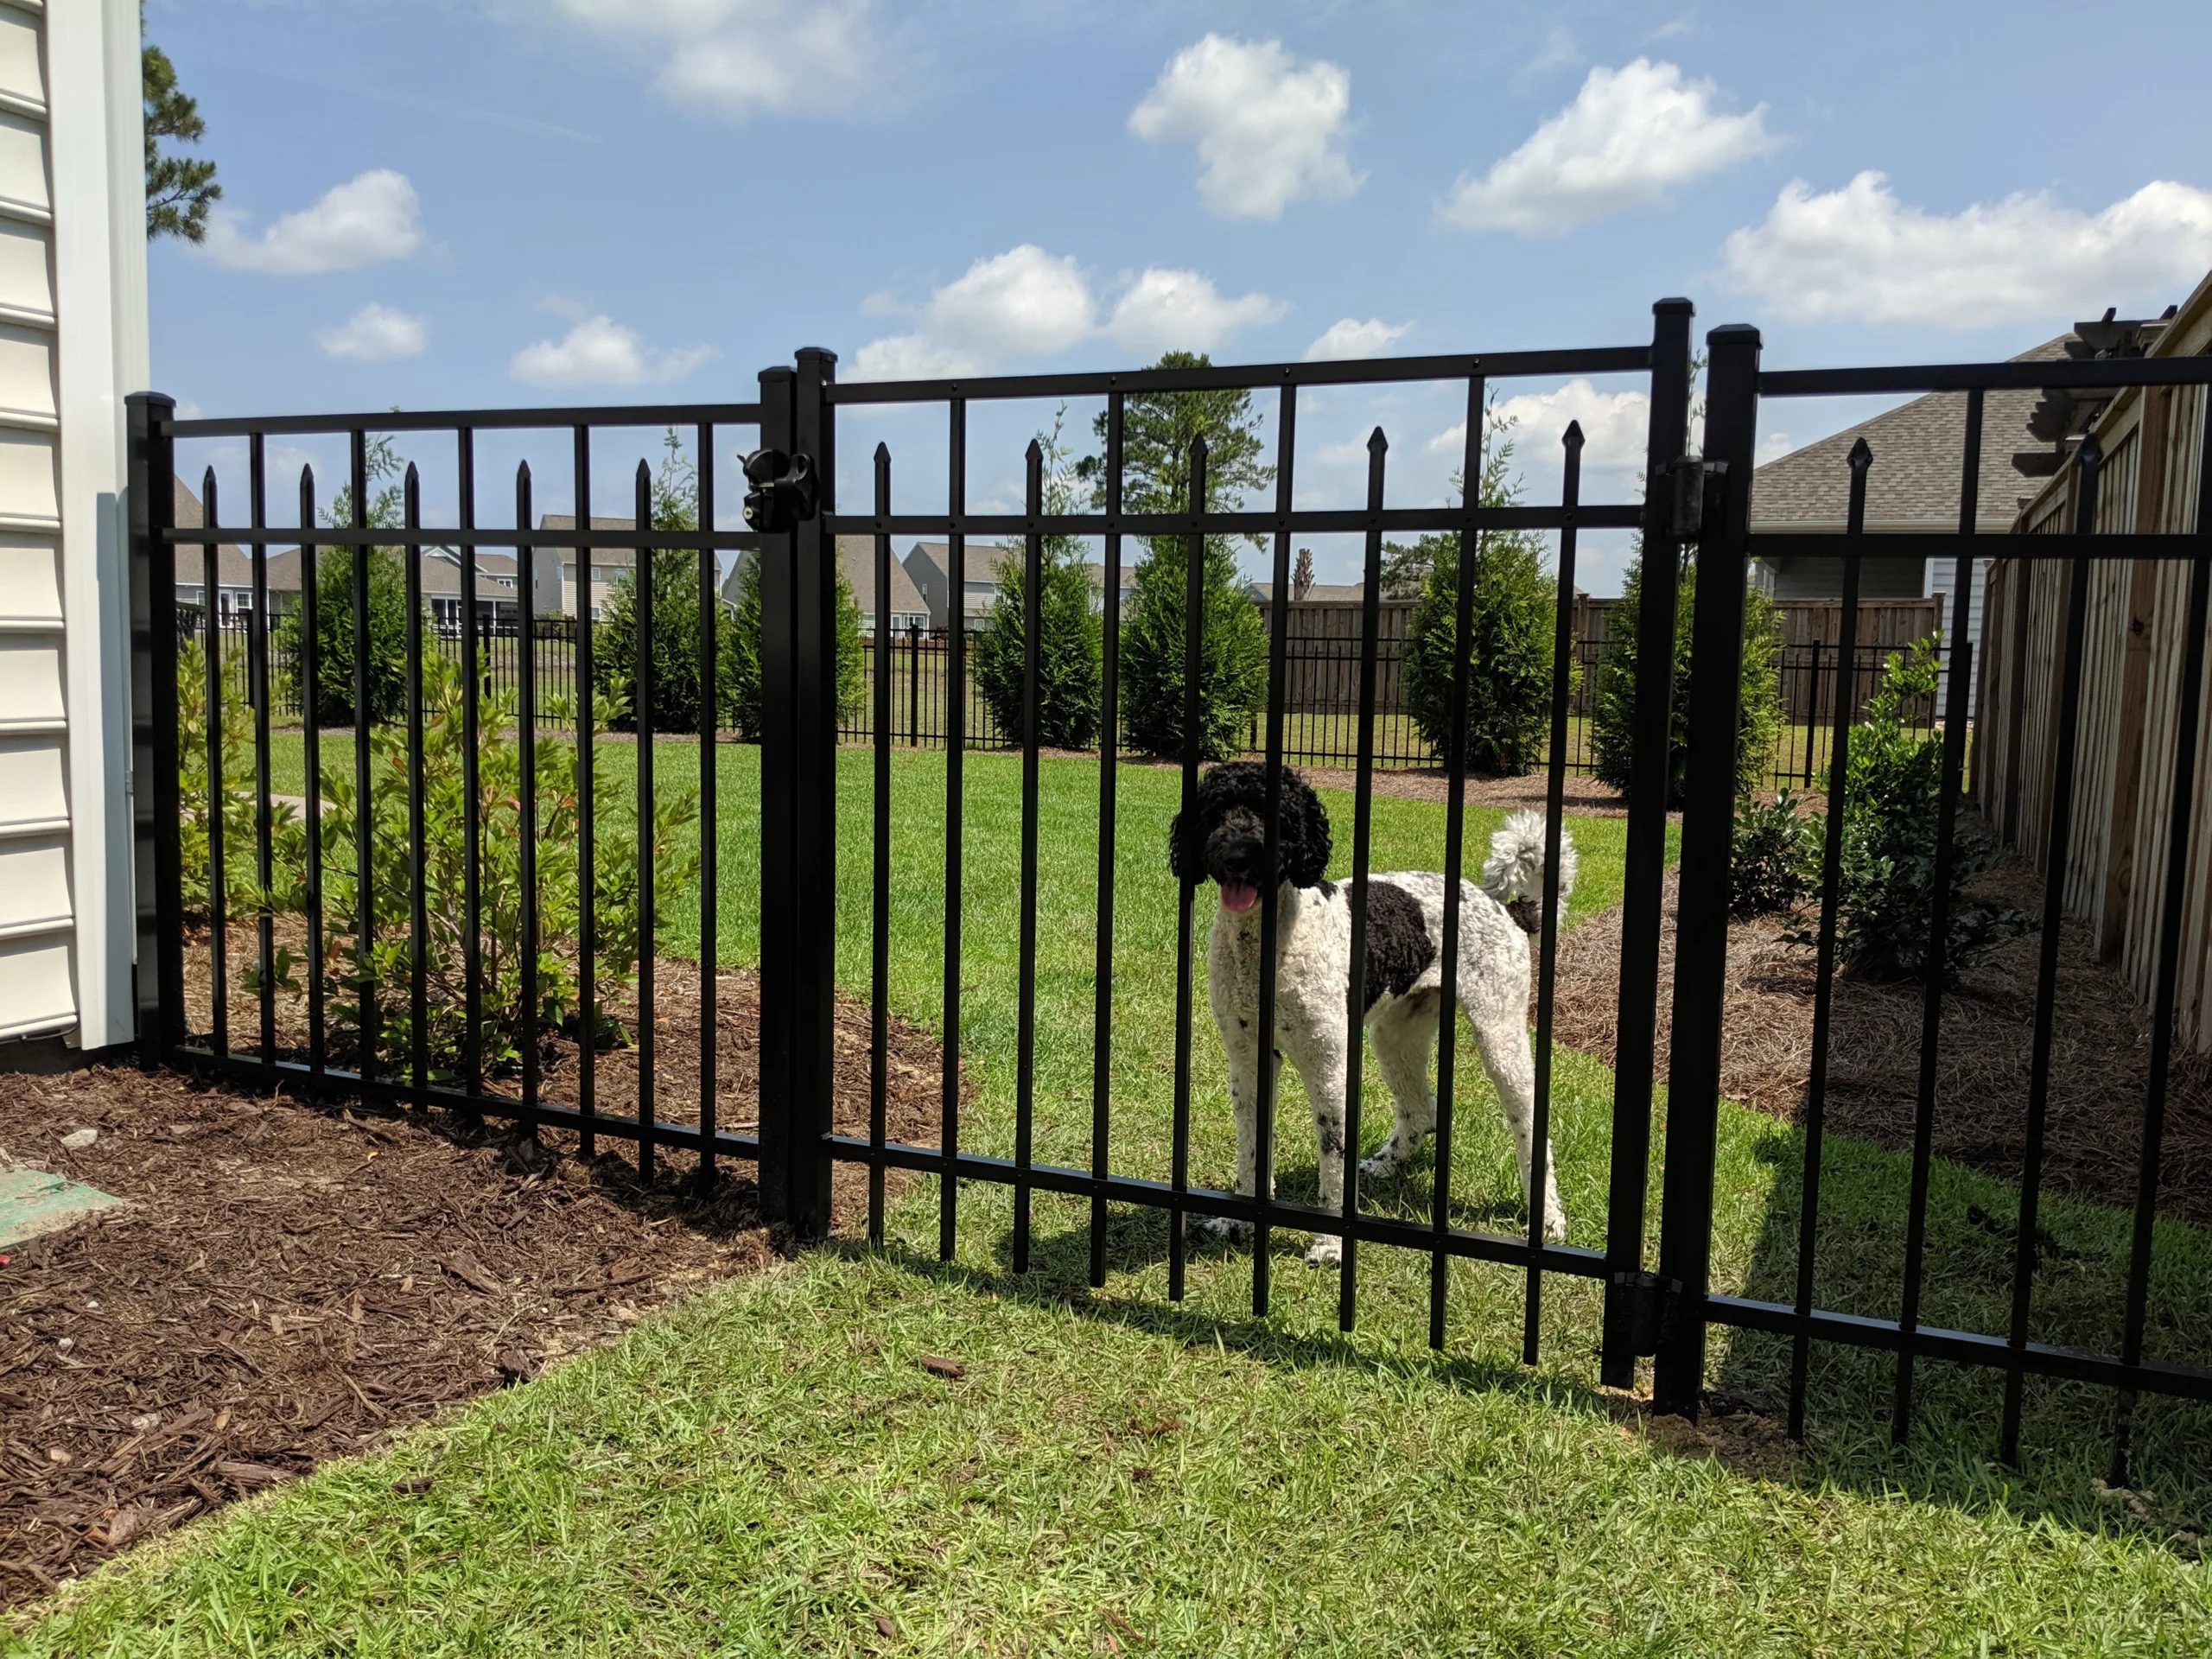 Dog behind a black aluminum or wrought iron style fence